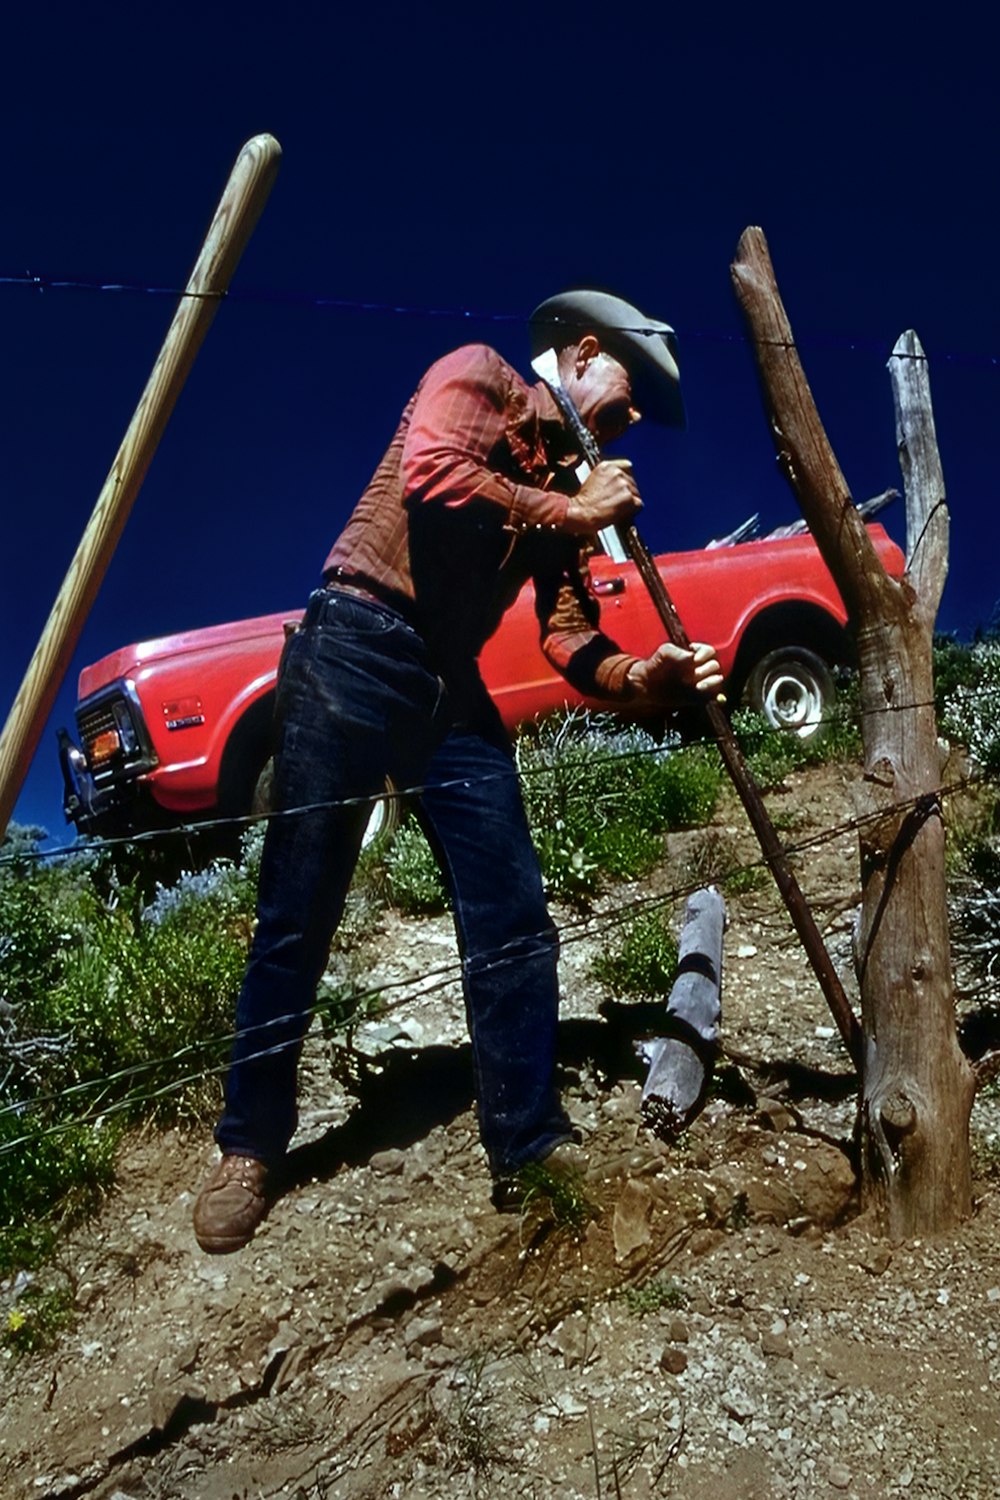 Un uomo con un cappello da cowboy sta lavorando su un albero